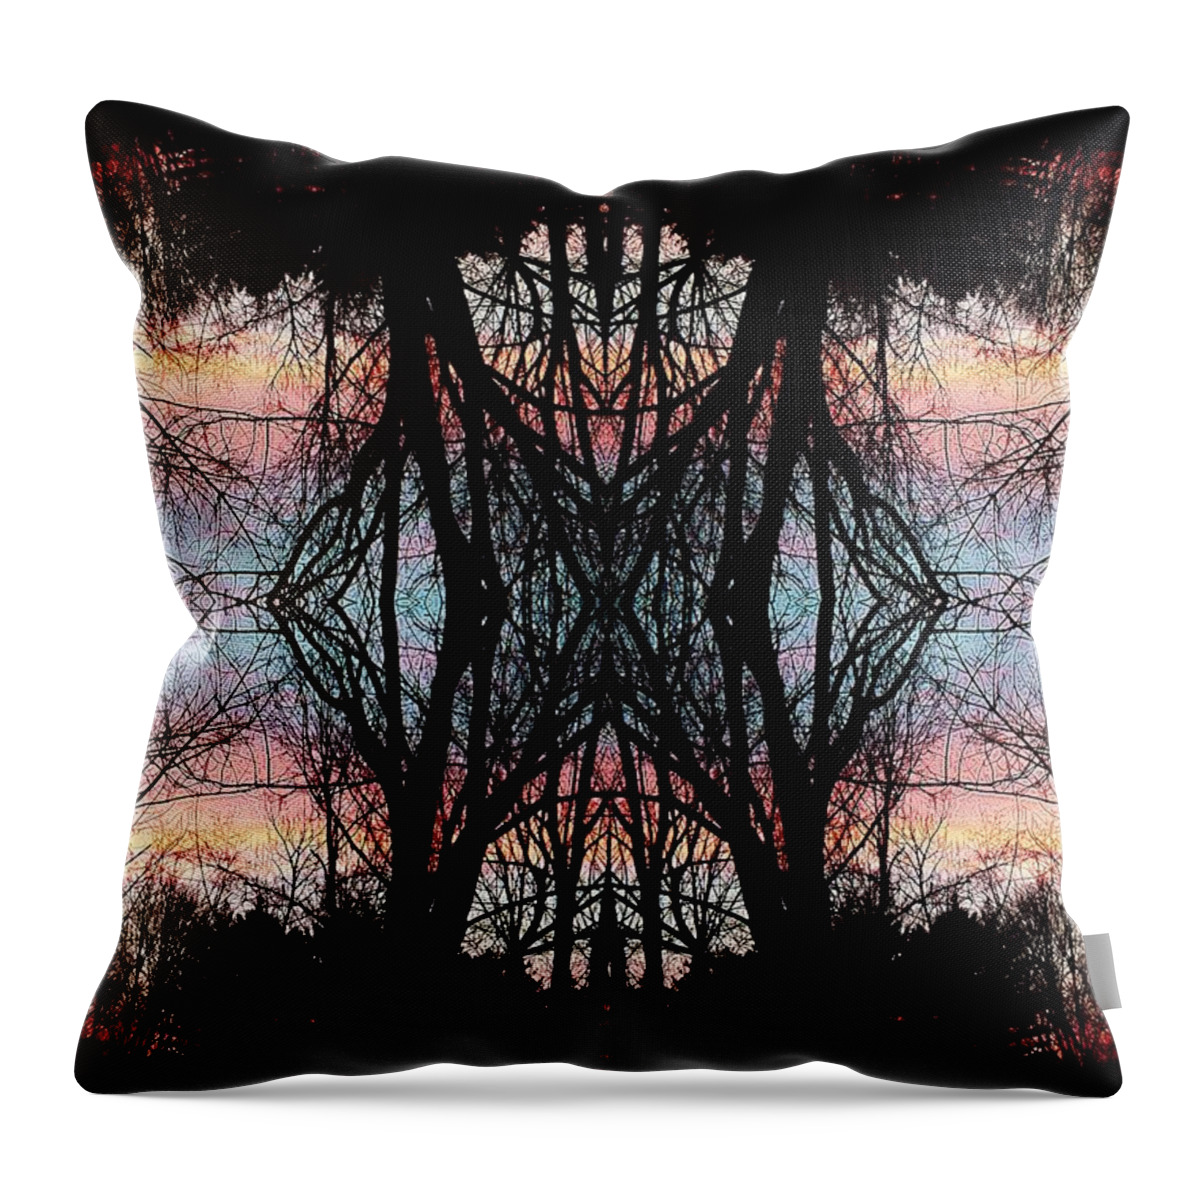 Evening Kaleidoscope Throw Pillow featuring the photograph Evening Kaleidoscope by Joy Nichols